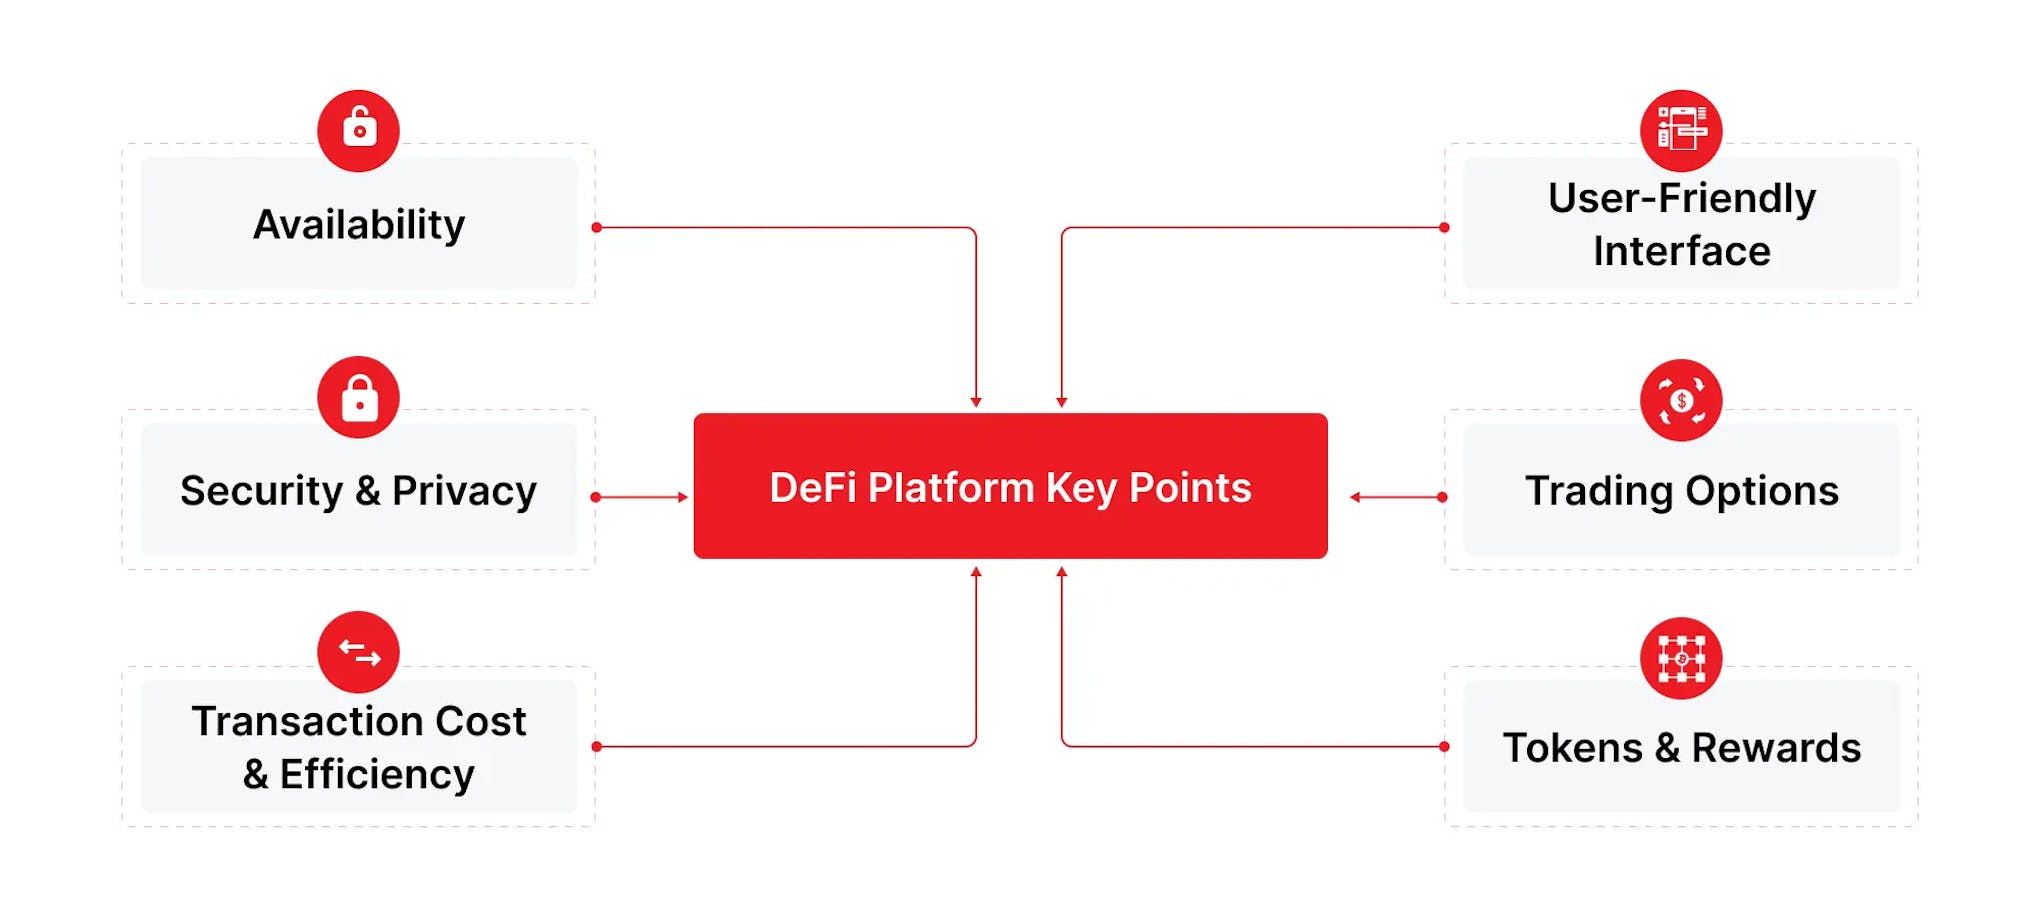 DeFi Platform Key Points